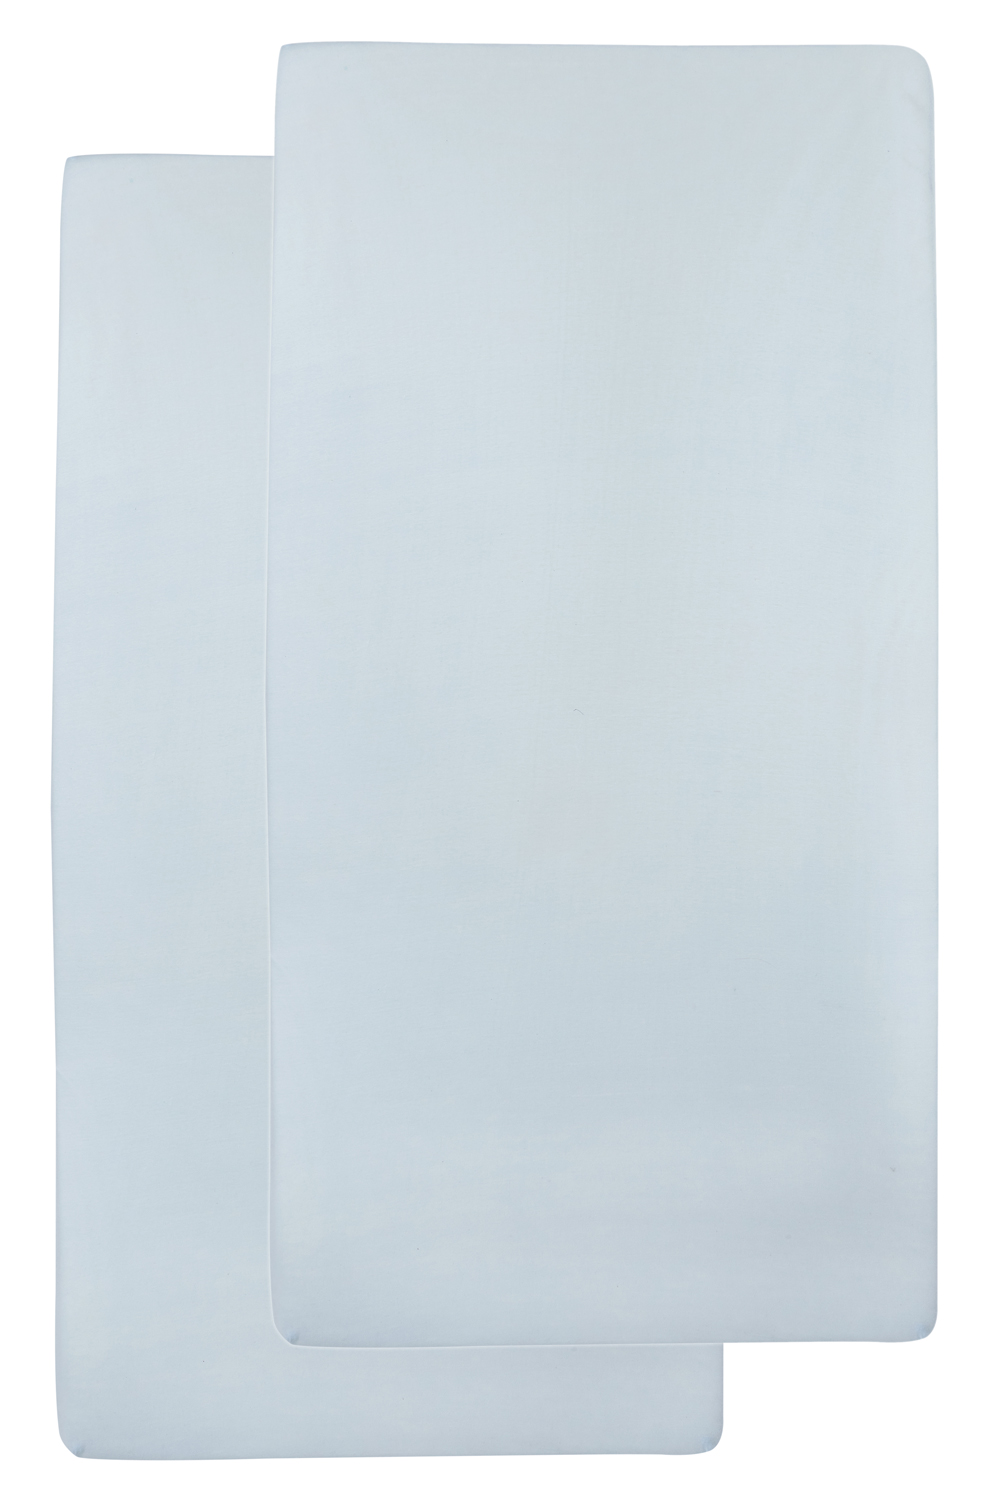 Jersey Hoeslaken 2-Pack - Lichtblauw - 70x140/150cm